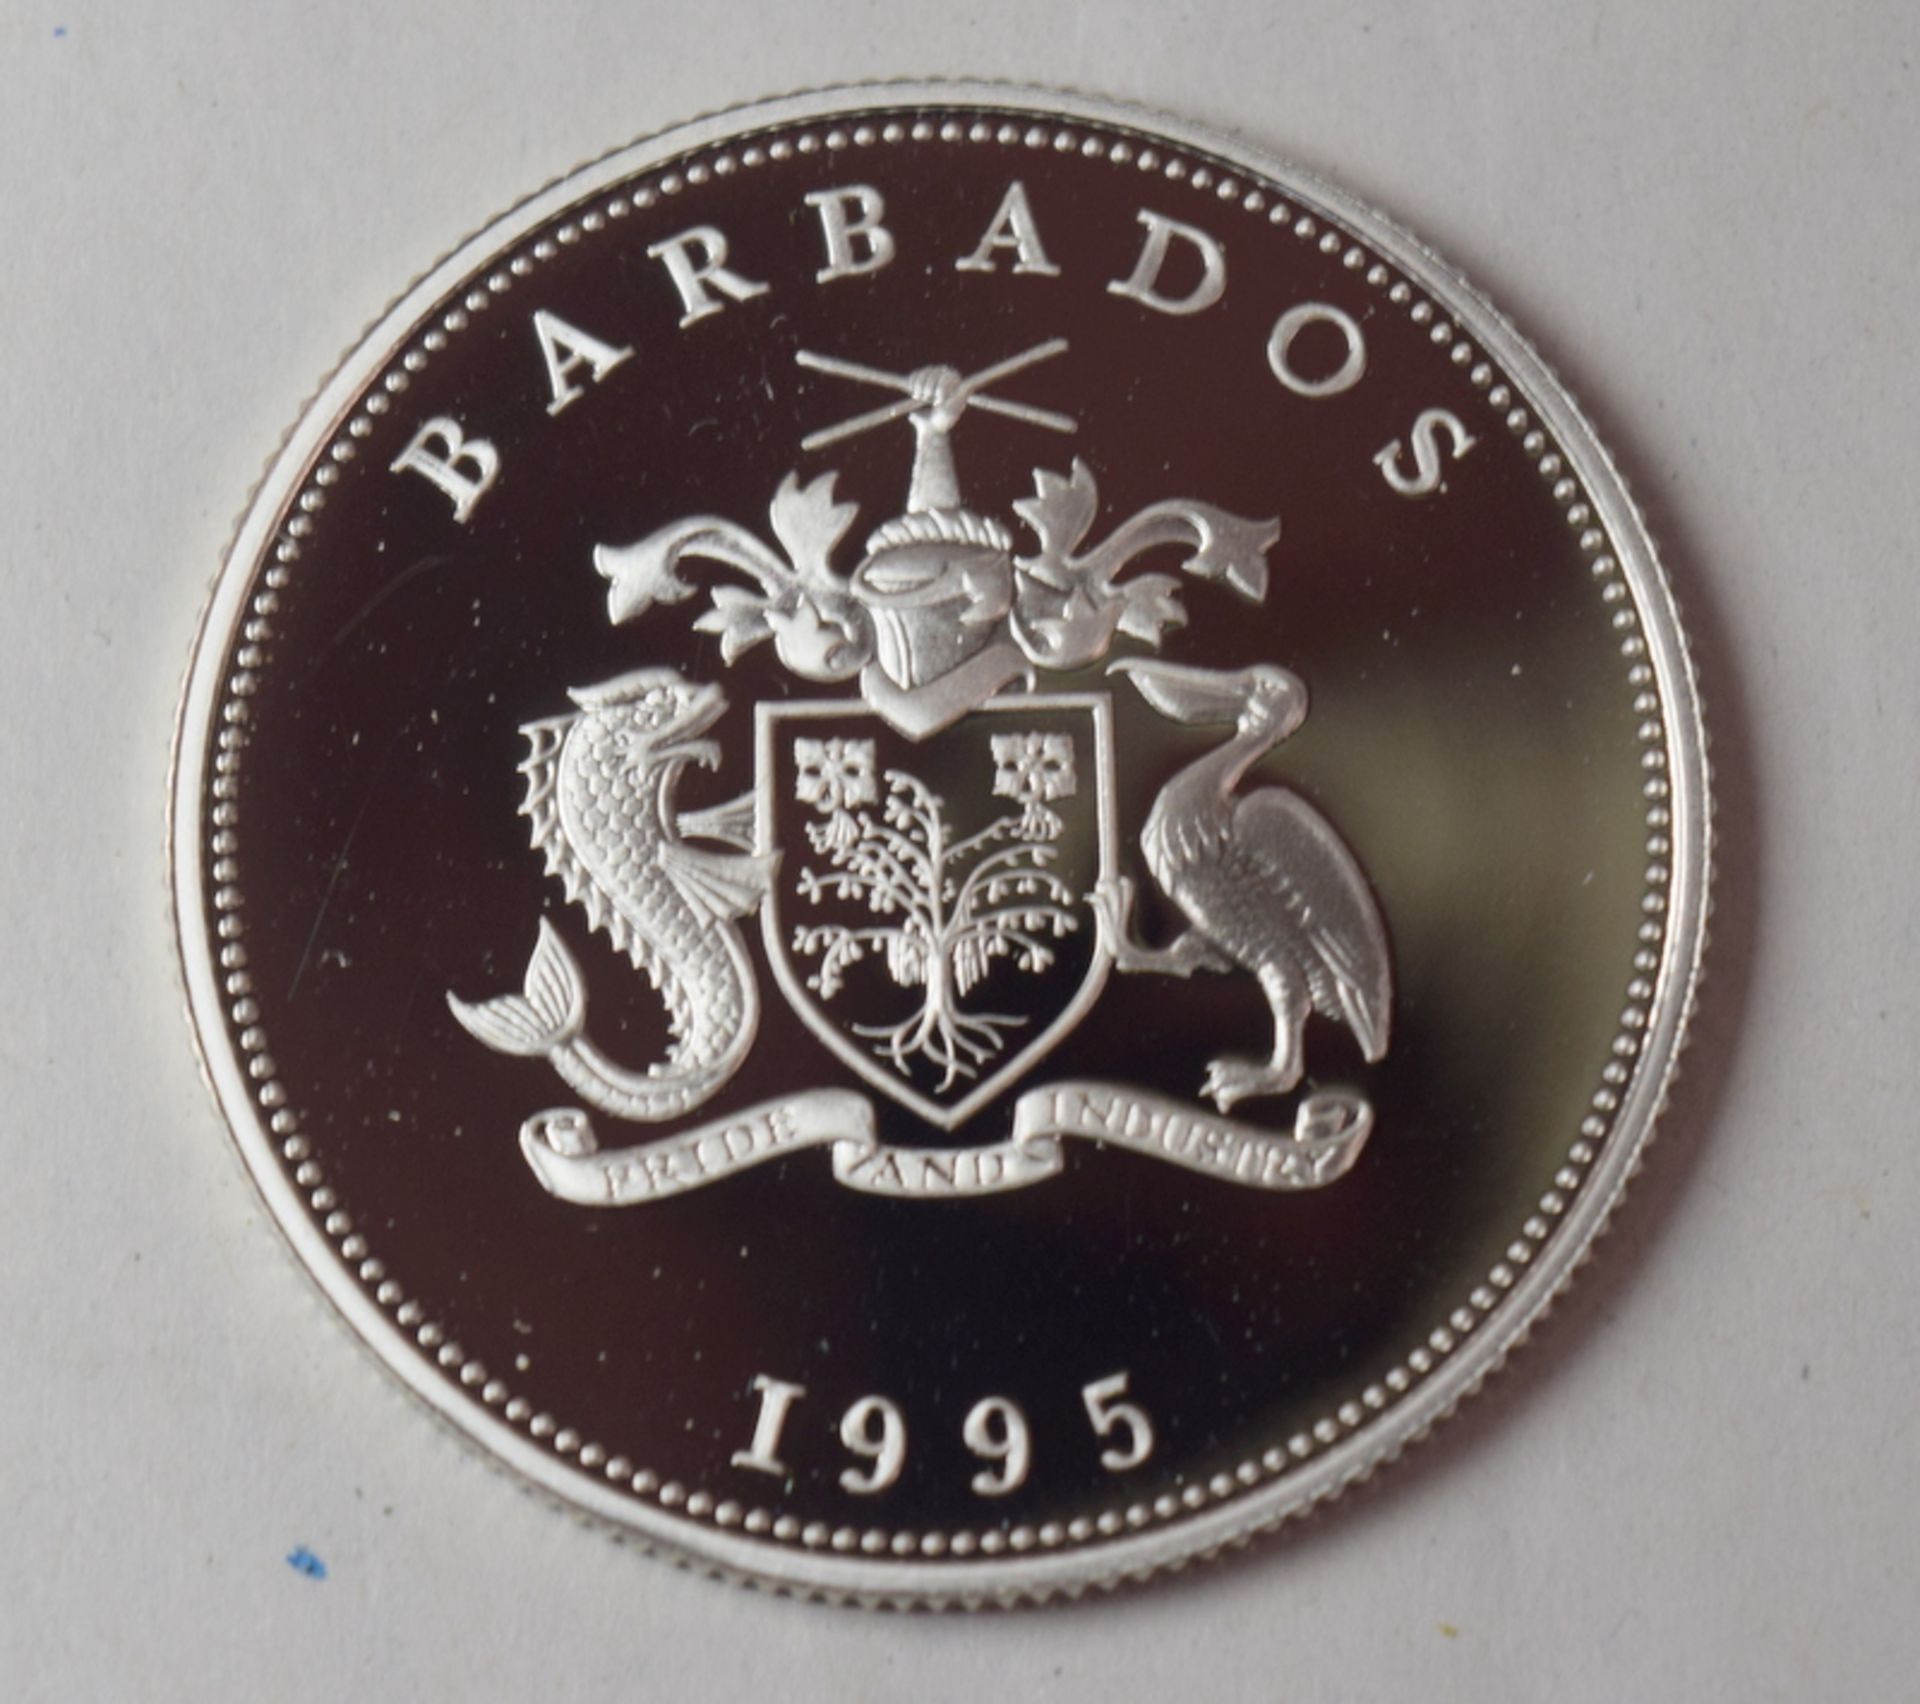 1995 Barbados Queen Mother's 95th Birthday Coin